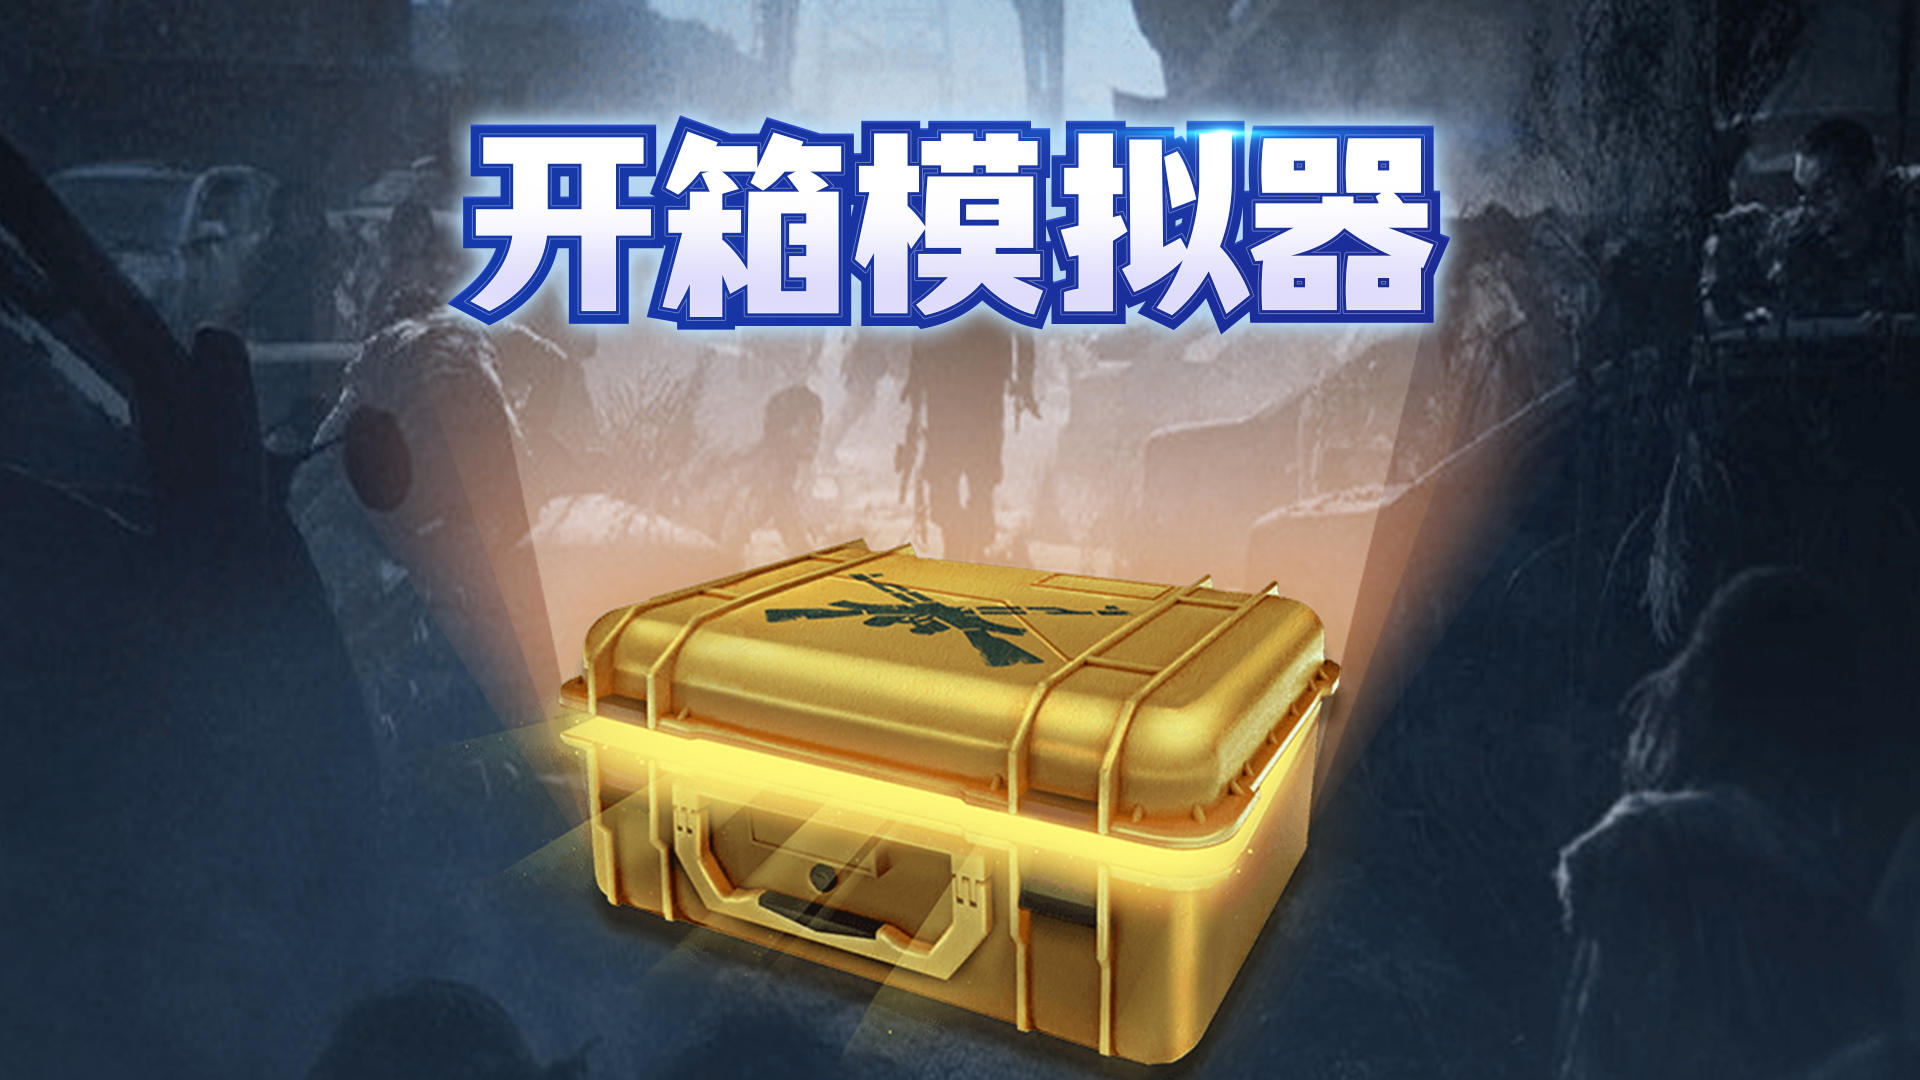 Banner of 開箱模擬器 